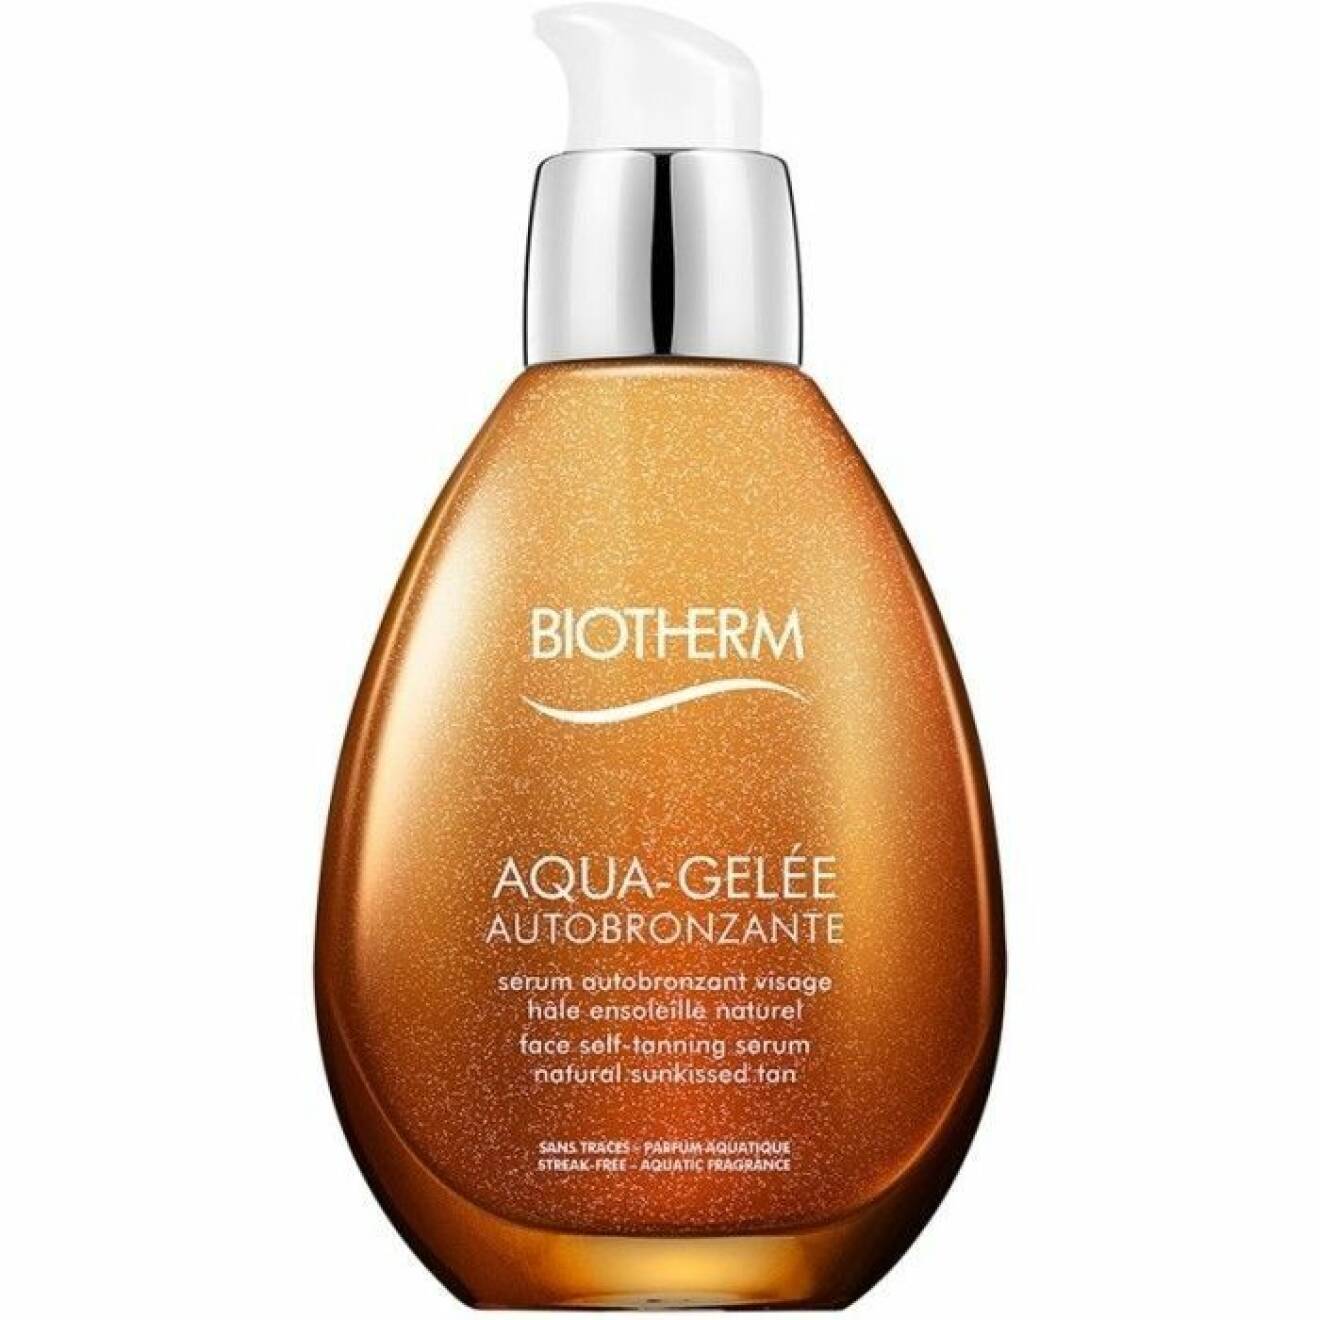 Biotherm Aqua-Gelée Autobronzanre Face Self-Tanning Serum